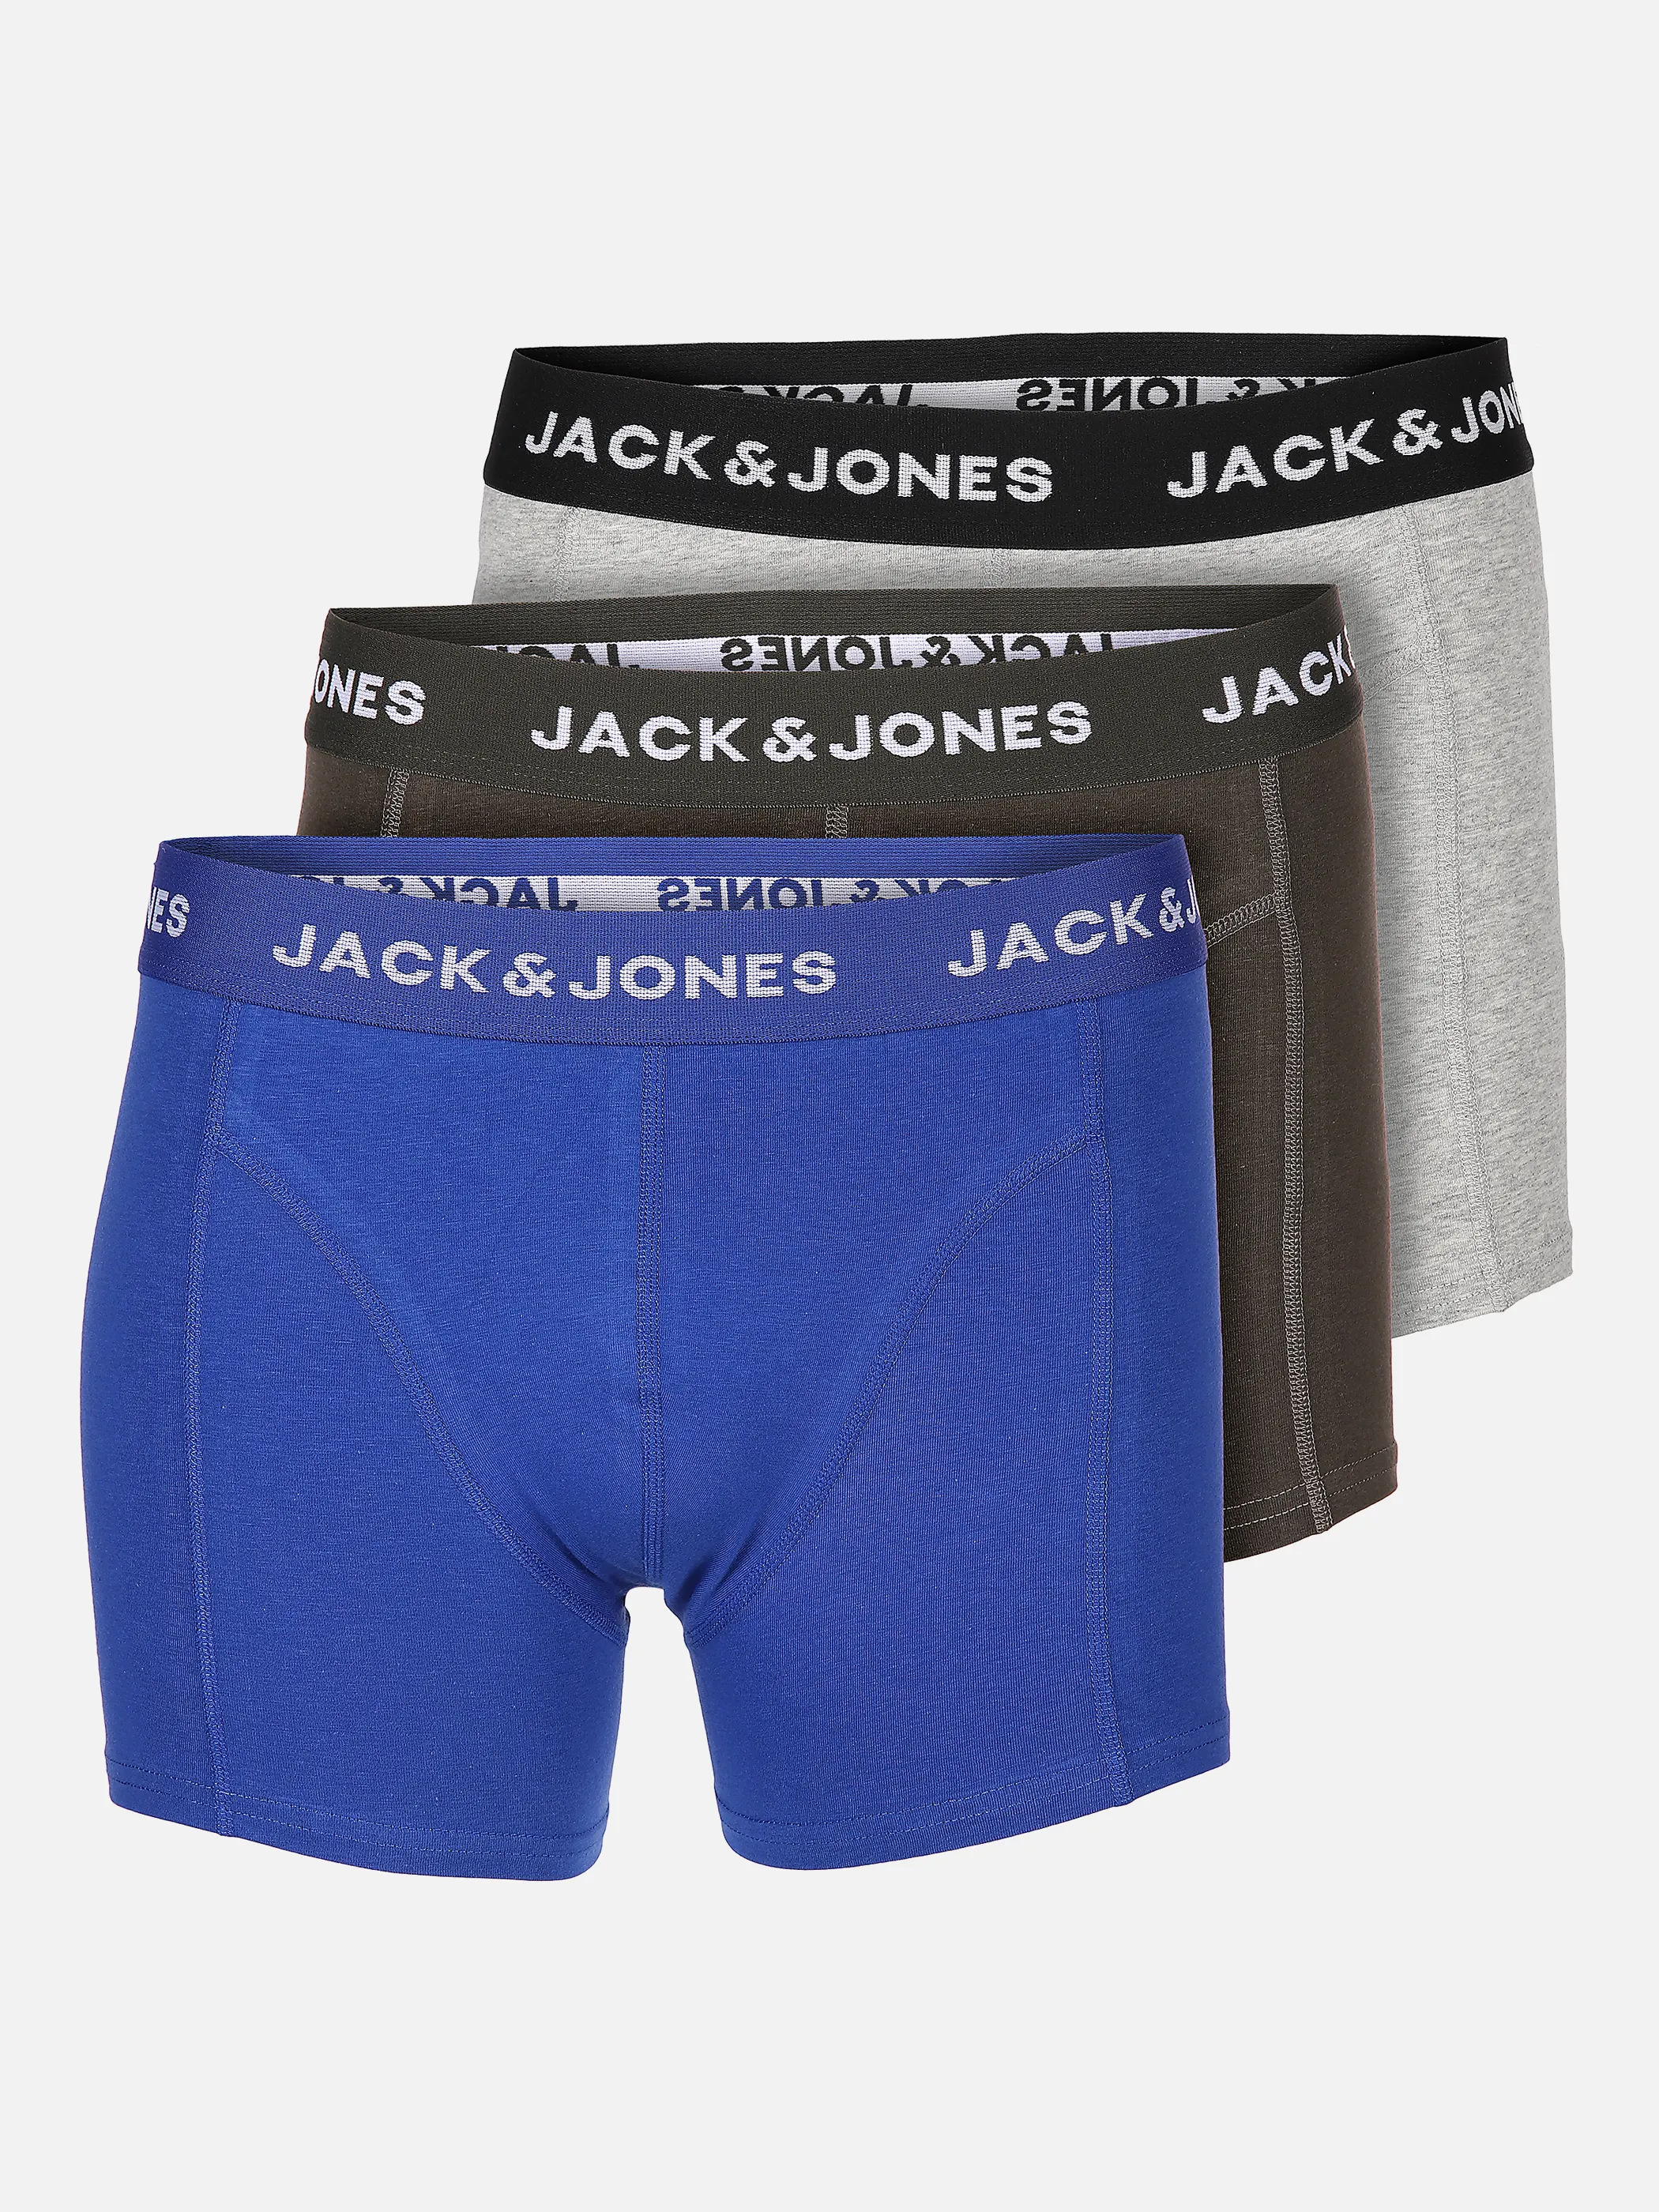 Jack Jones 12176797 JACPLAIN TRUNKS 3 PAC Grau 837549 179085001 1